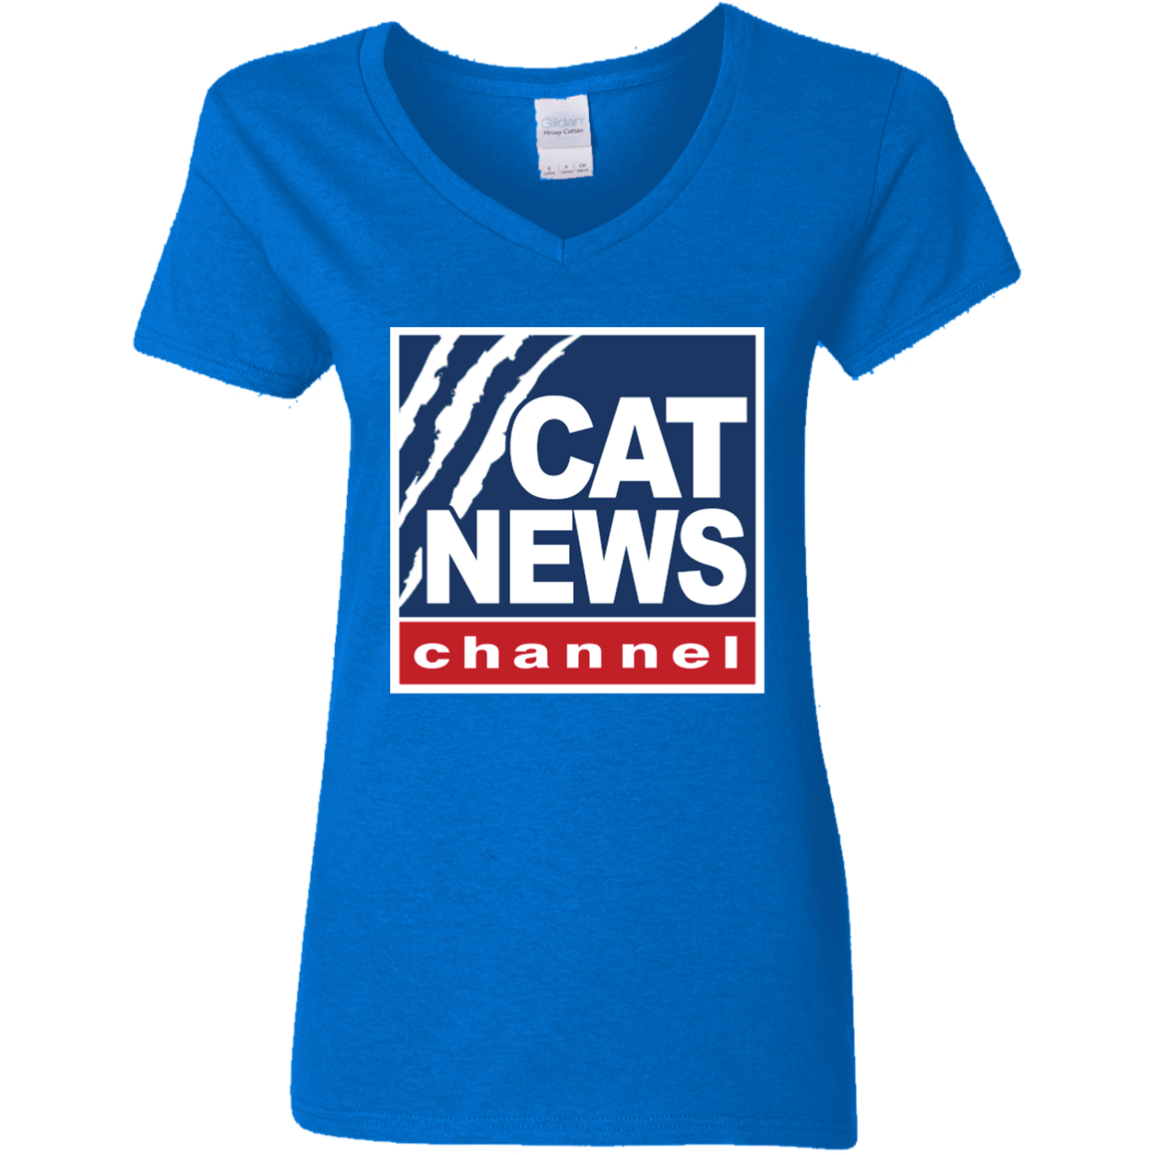 "Cat News" Ladies' 5.3 oz. V-Neck T-Shirt